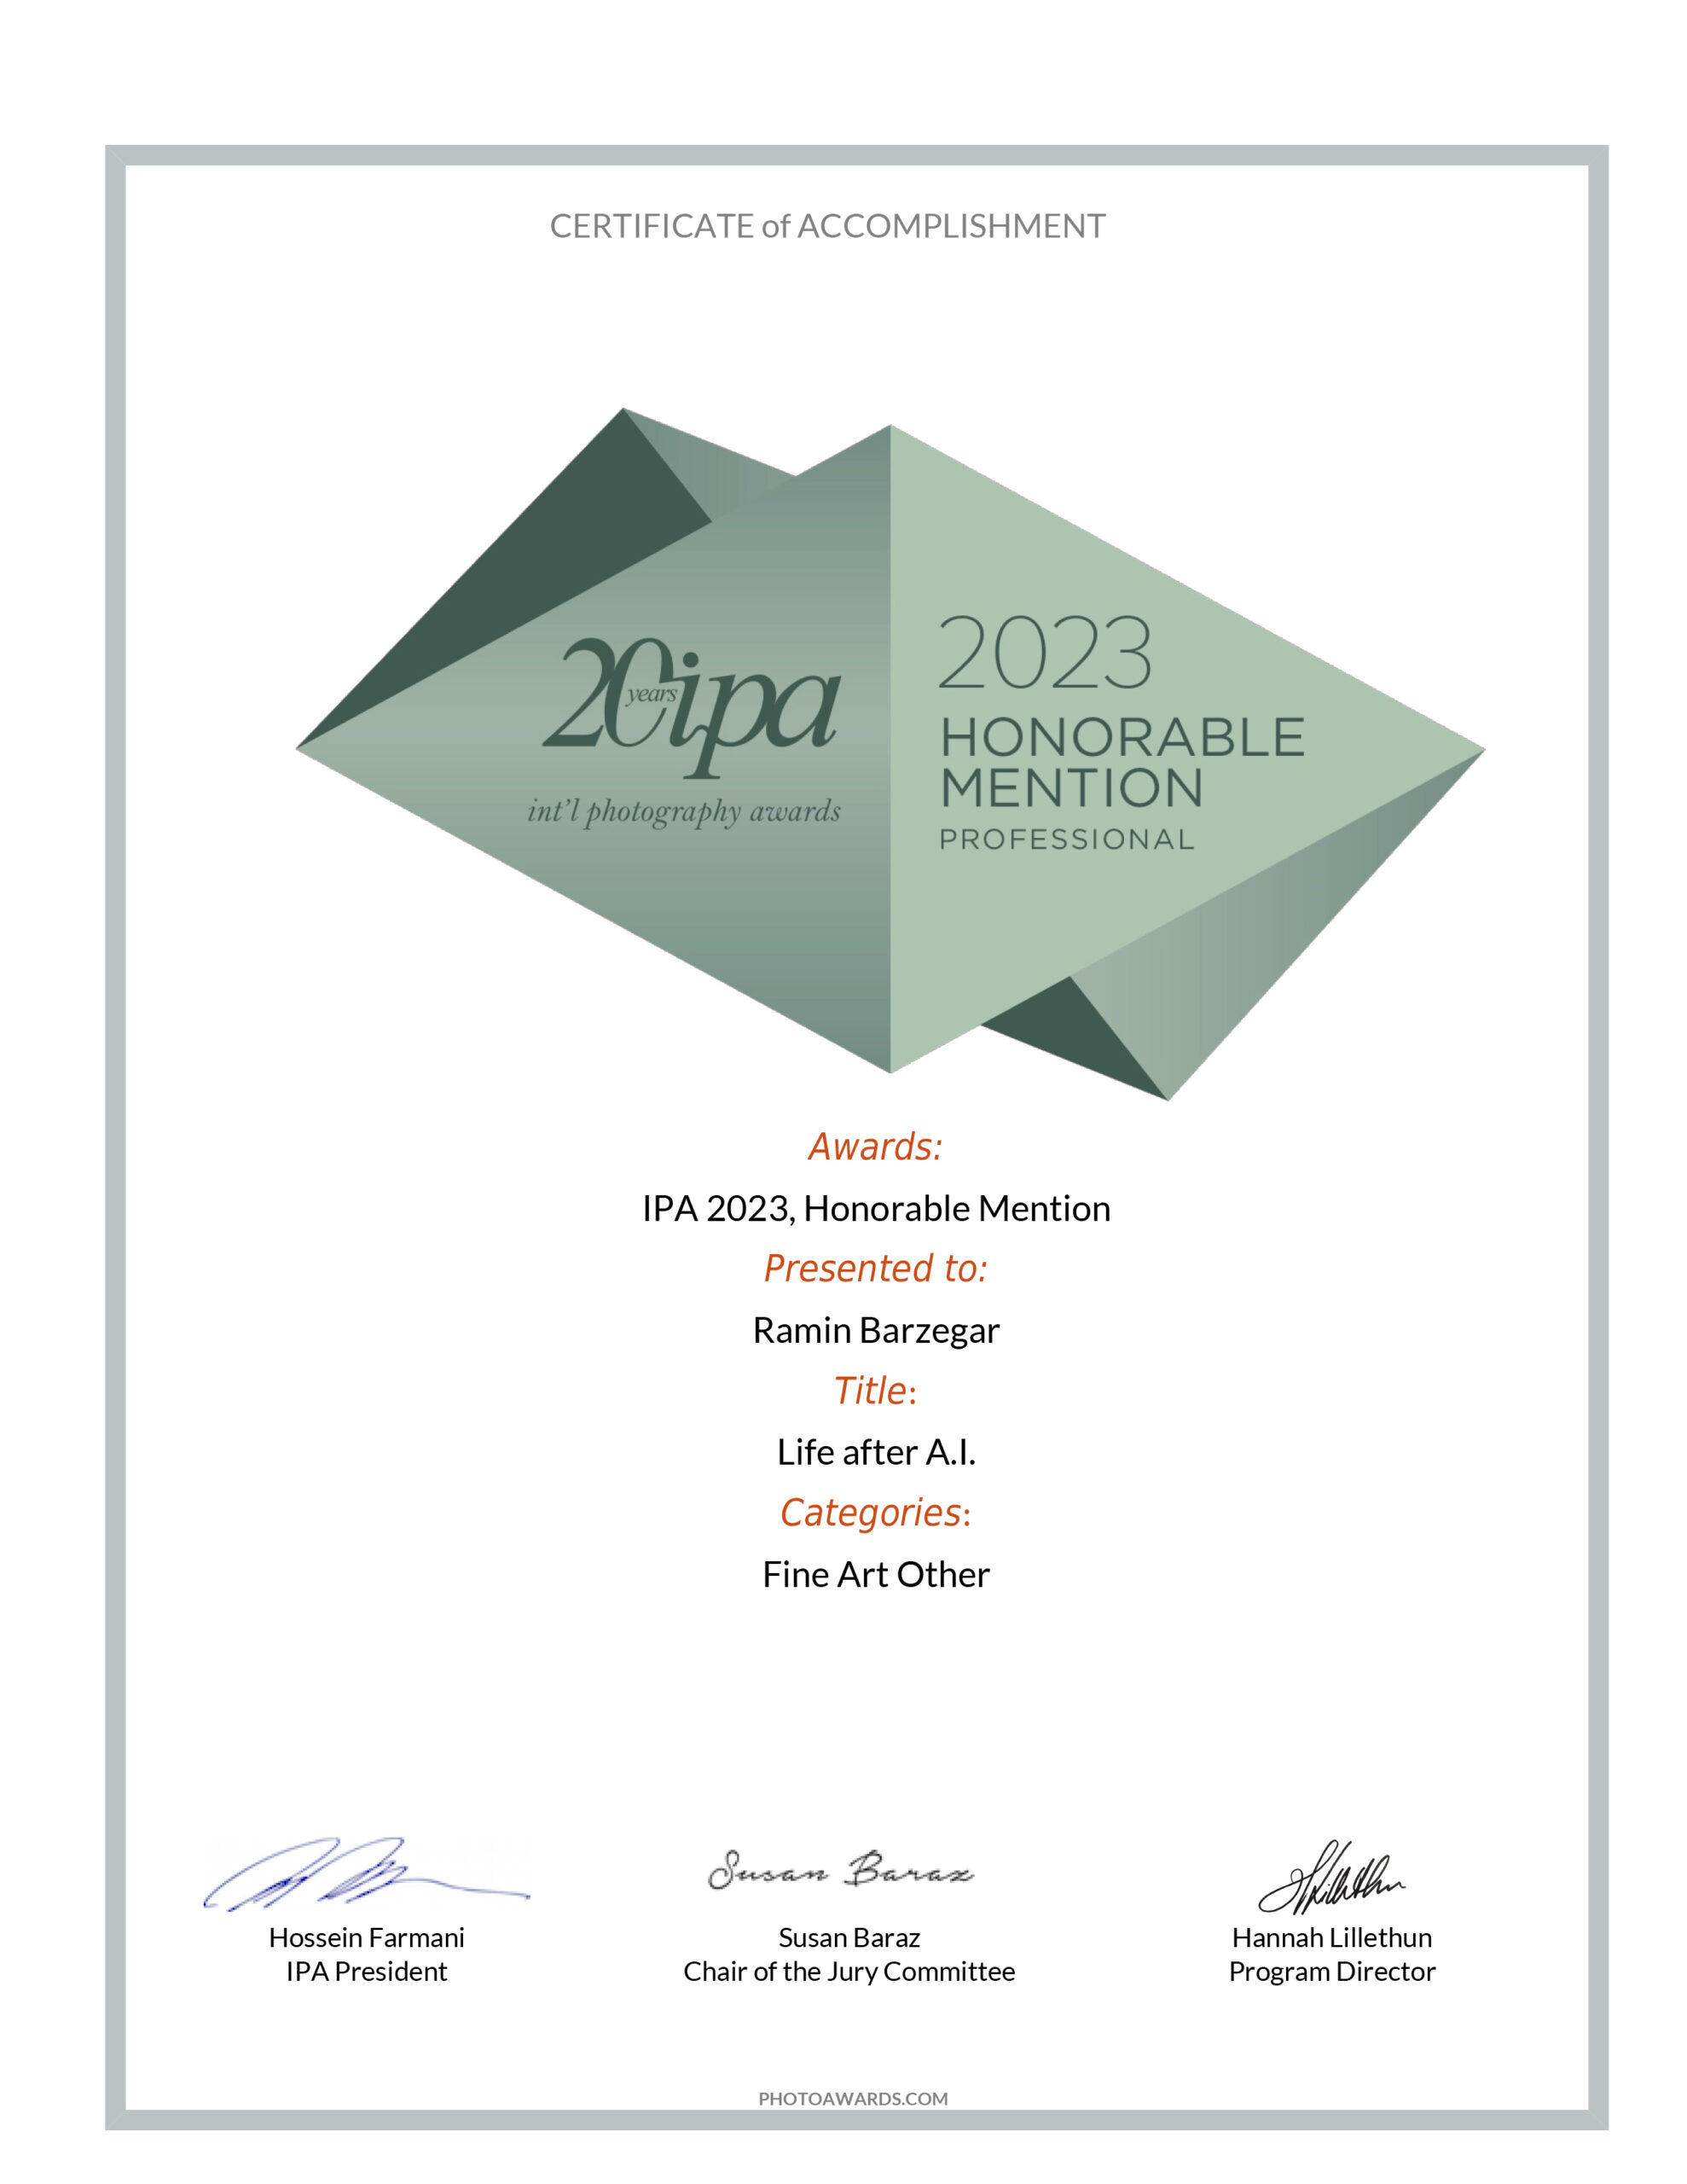 Awards: IPA 2023, Honorable Mention
Ramin Barzegar Fine Art 
رامین برزگر